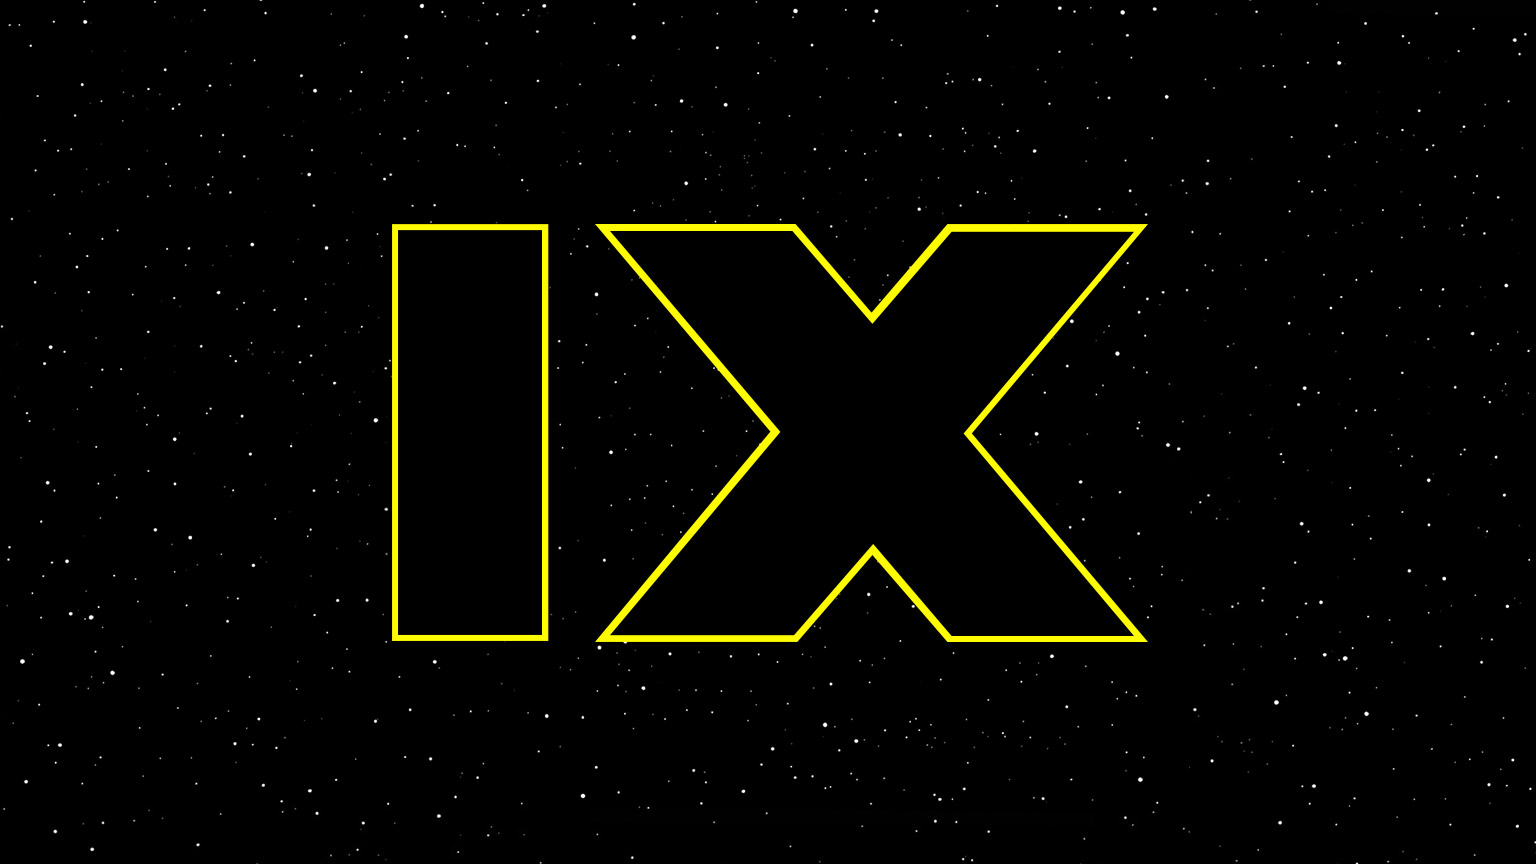 Star Wars Episode IX Updated logo casting announcement